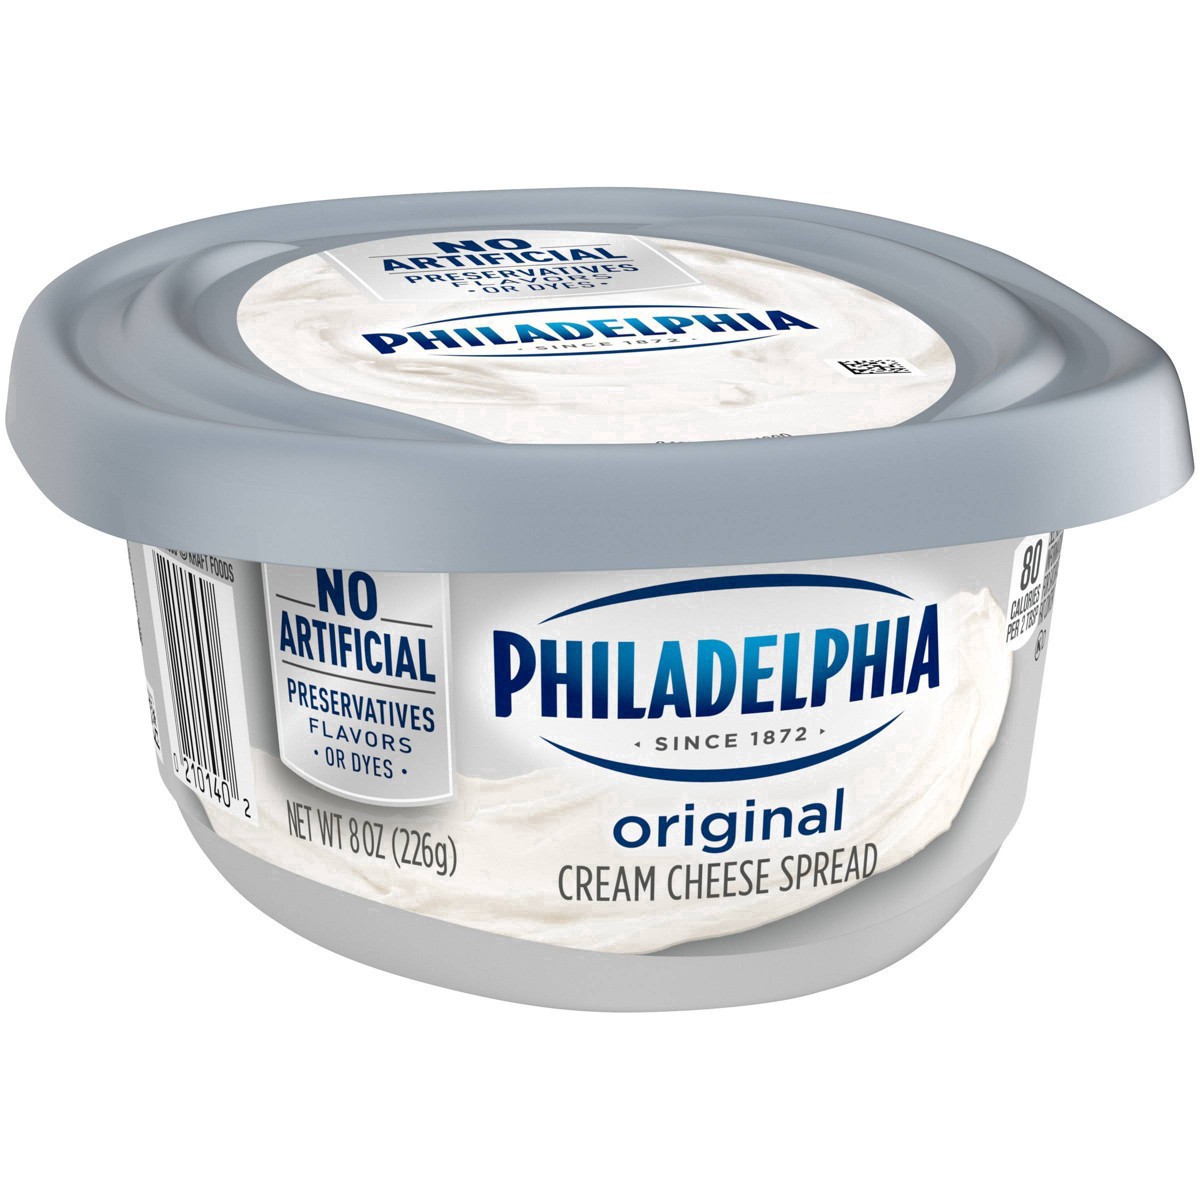 slide 32 of 67, Philadelphia Original Cream Cheese Spread, 8 oz